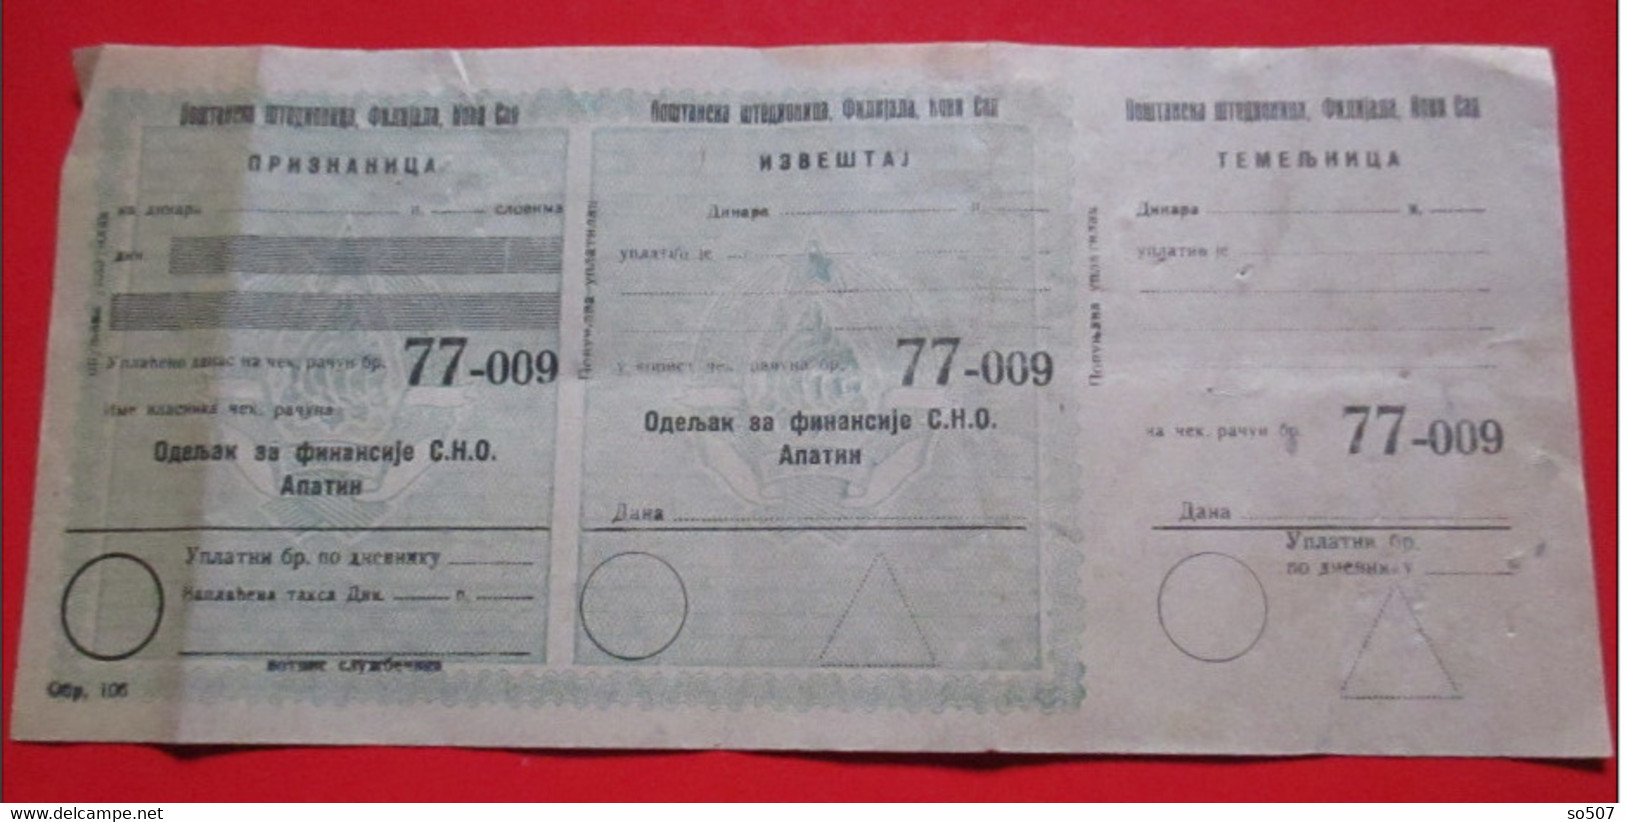 X1 - Check, Cheque, Promissory Note, Bill Of Exchange - Postal Savings Bank Novi Sad, Apatin, FNRJ Yugoslavia - Schecks  Und Reiseschecks